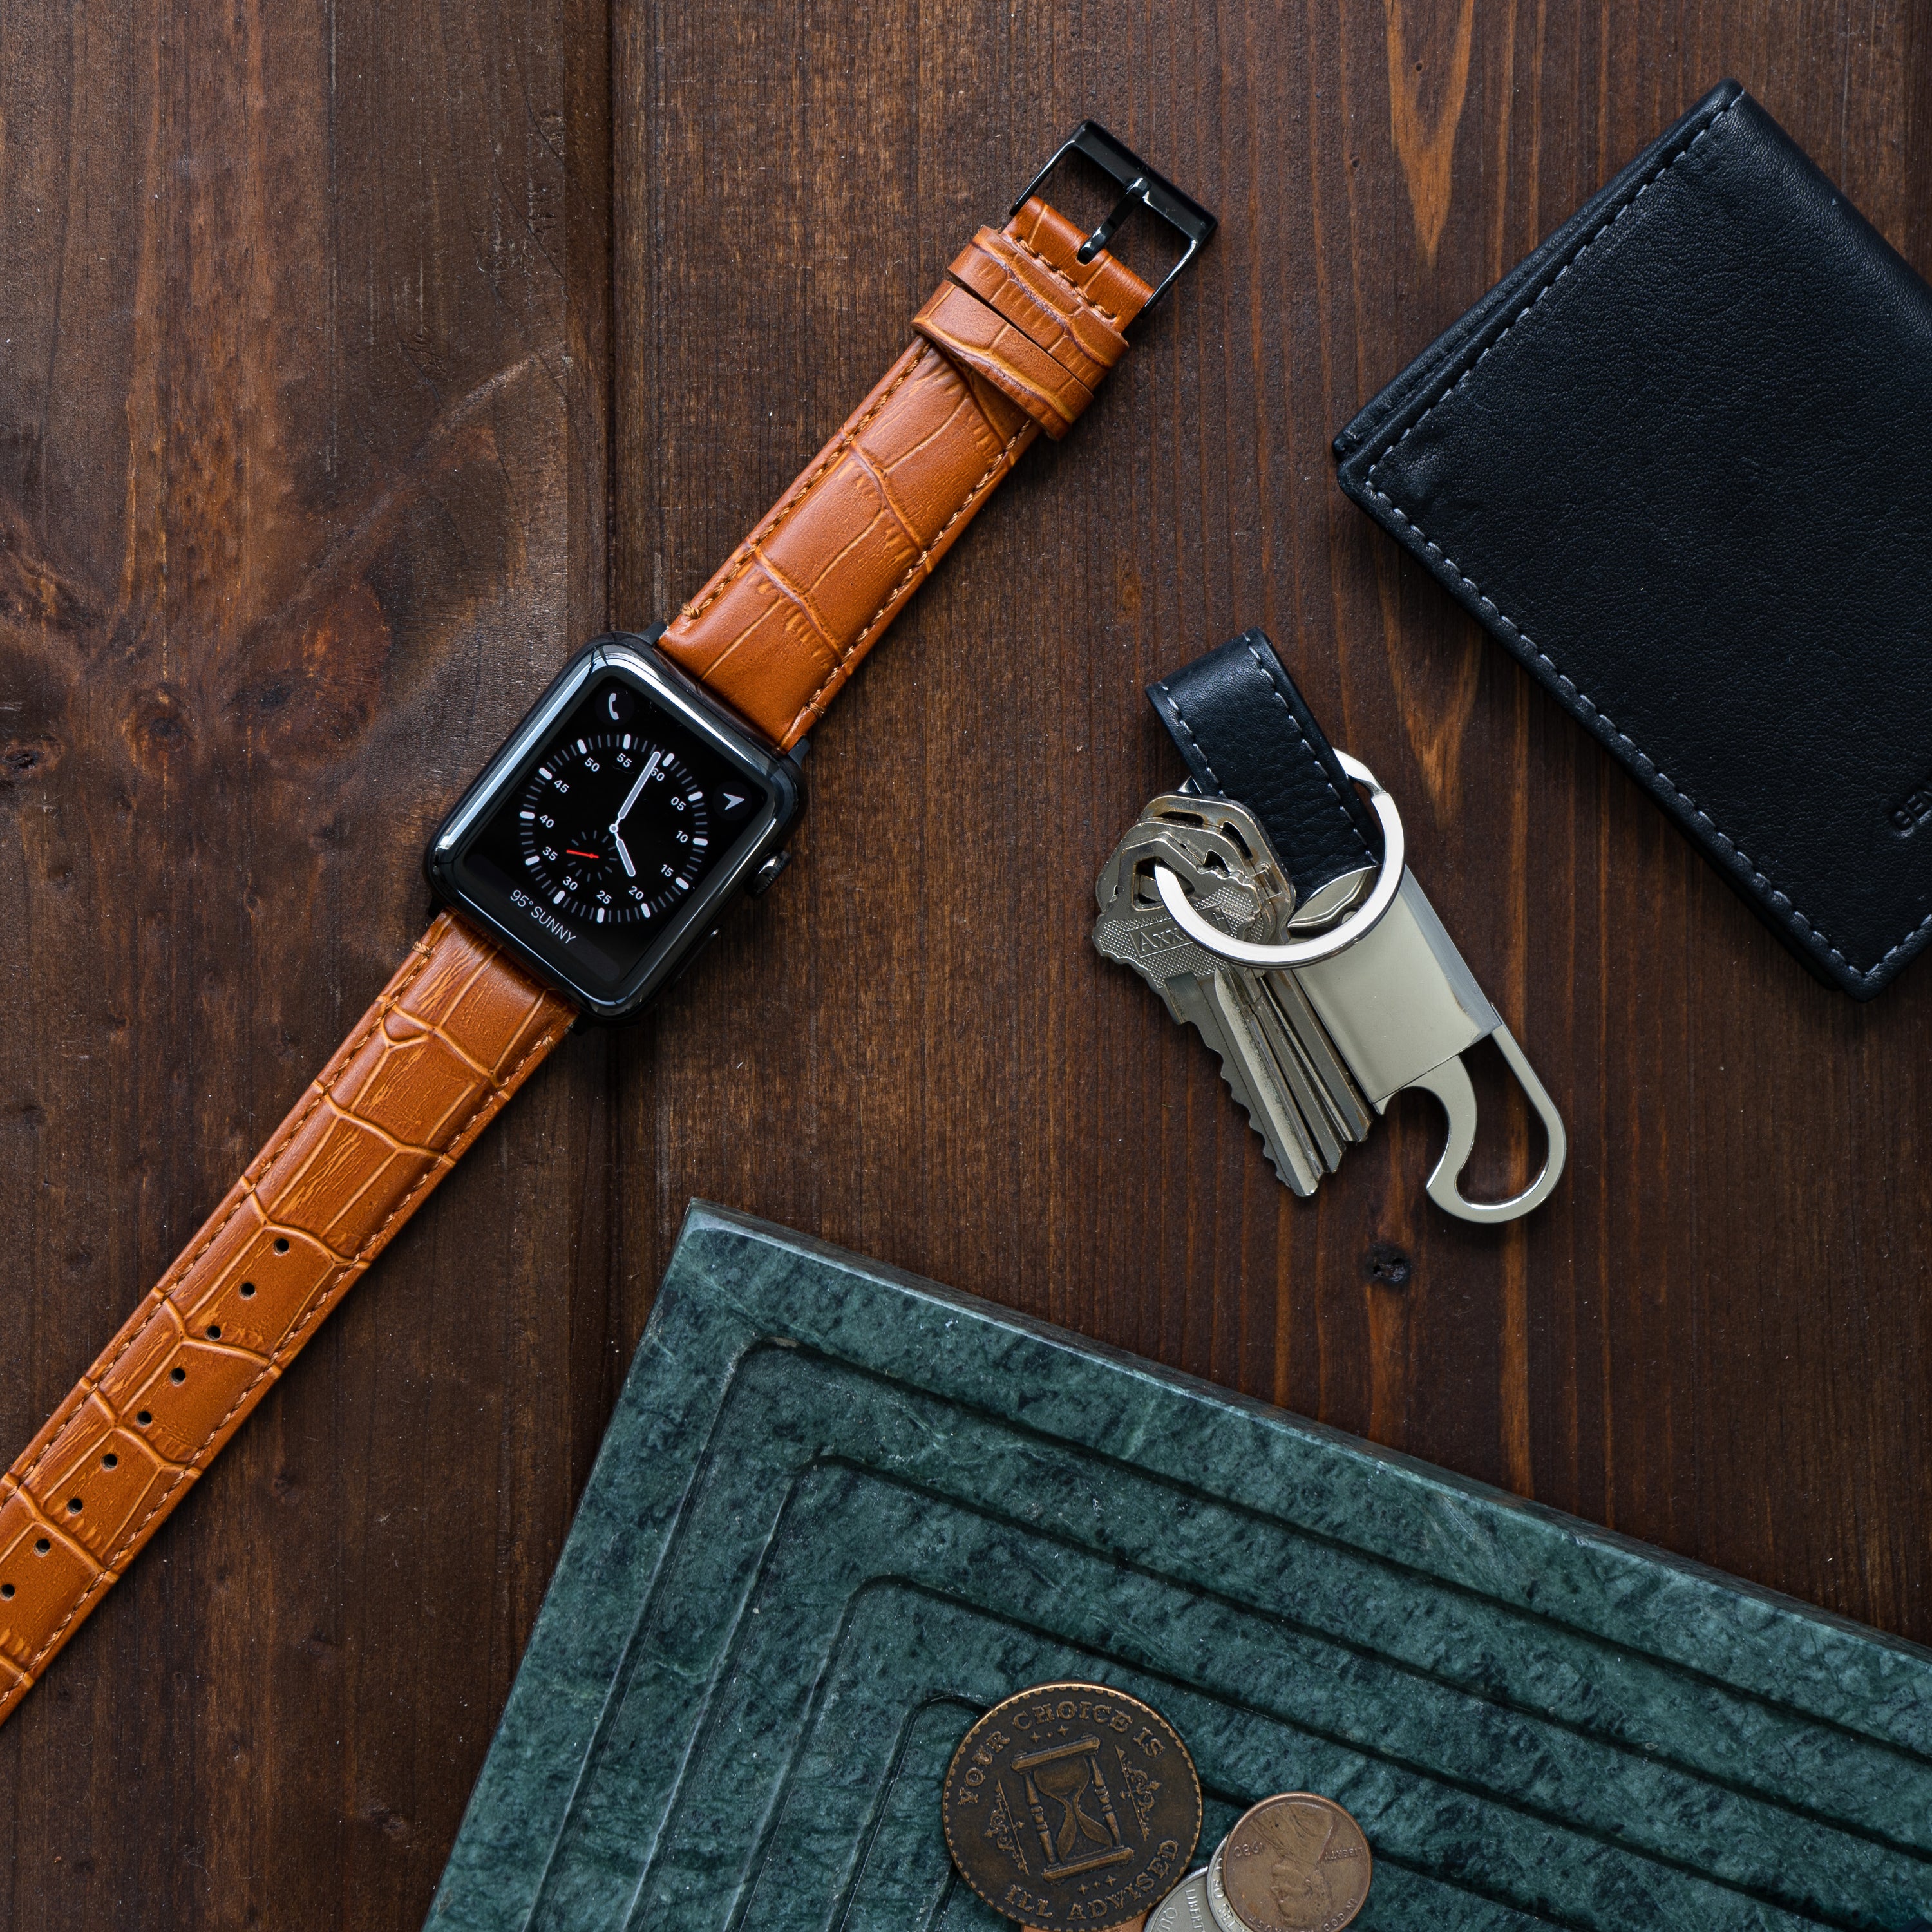 Archer Watch Straps - Premium Nylon Bands for Apple Watch